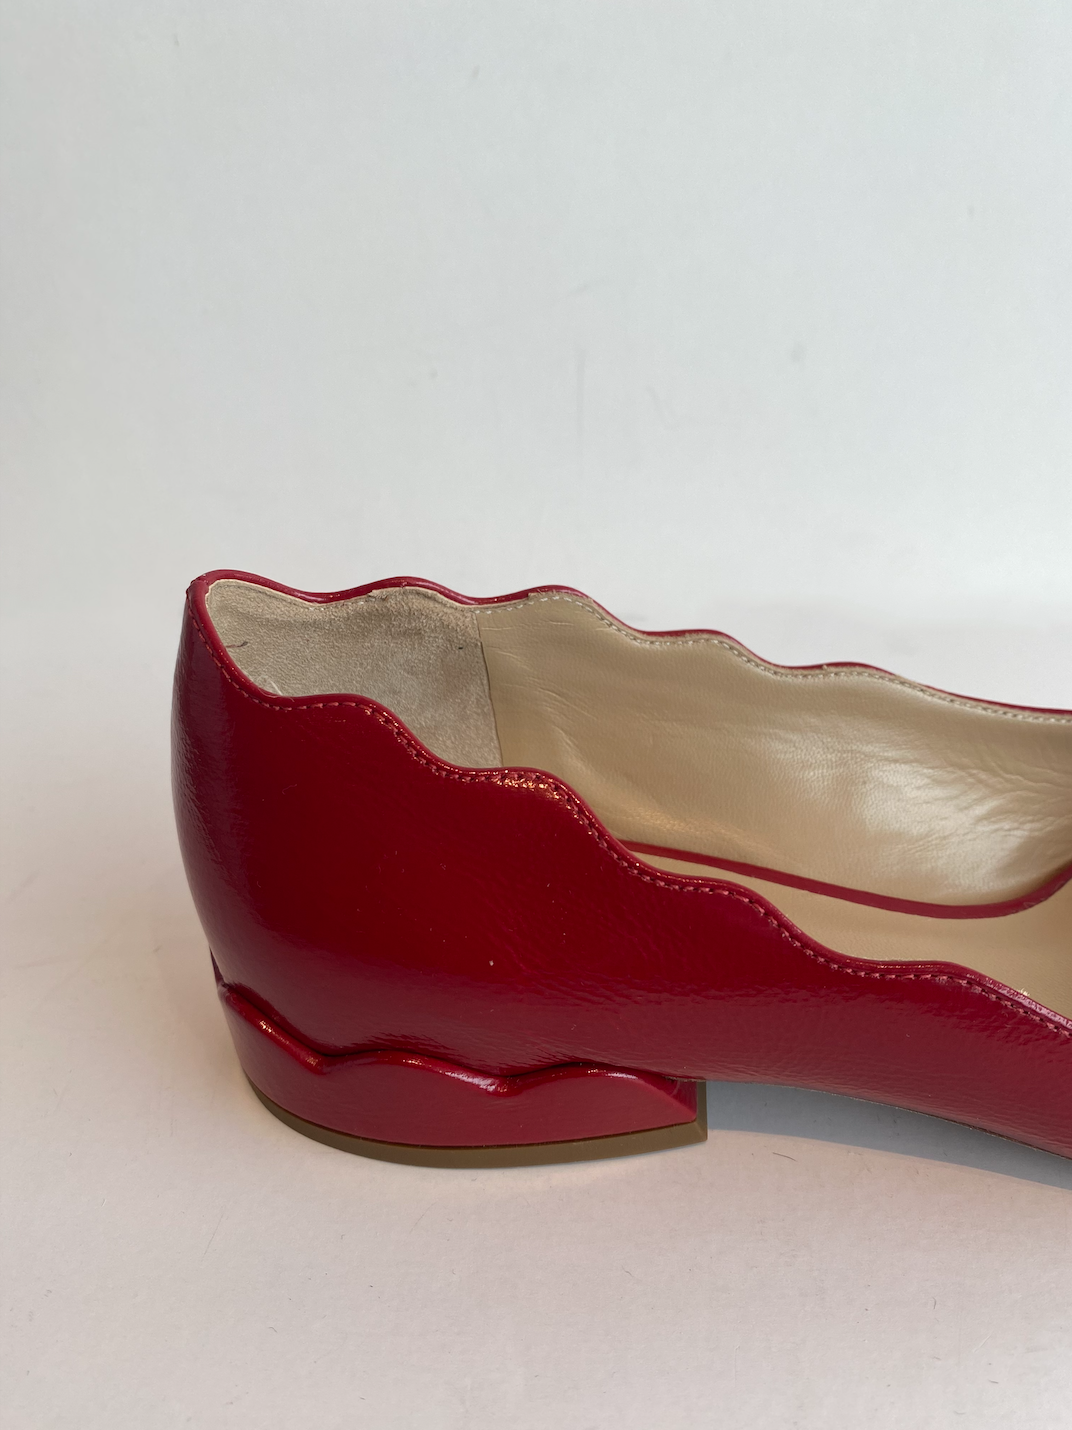 Chloe Scalloped Ballet Flats Red Patent Heel